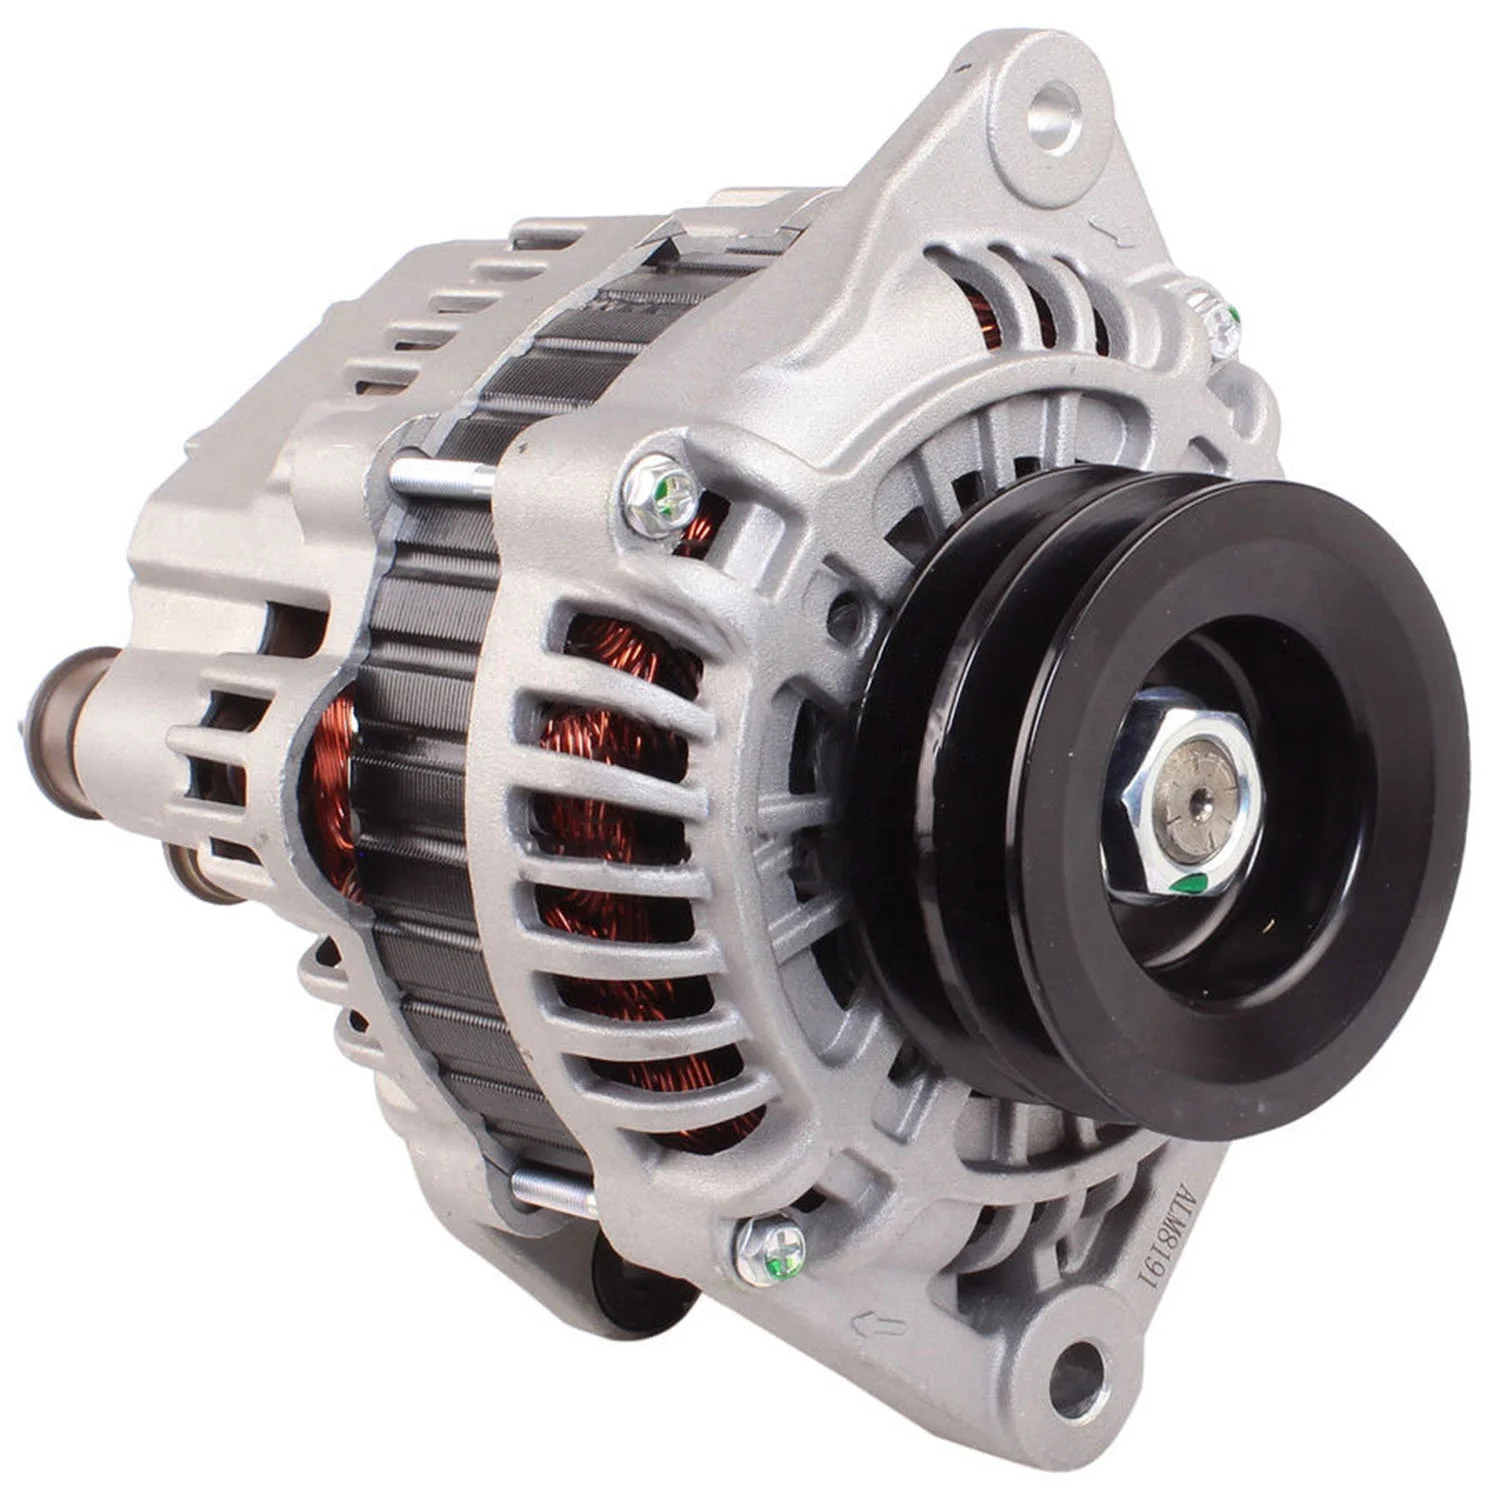 

Auto Dynamo Alternator Generator For Delco Lucas Mitsubishi 115454 CAL35659 CAL35659AS CAL35659ES CAL35659OS CAL35659RS DRA0847